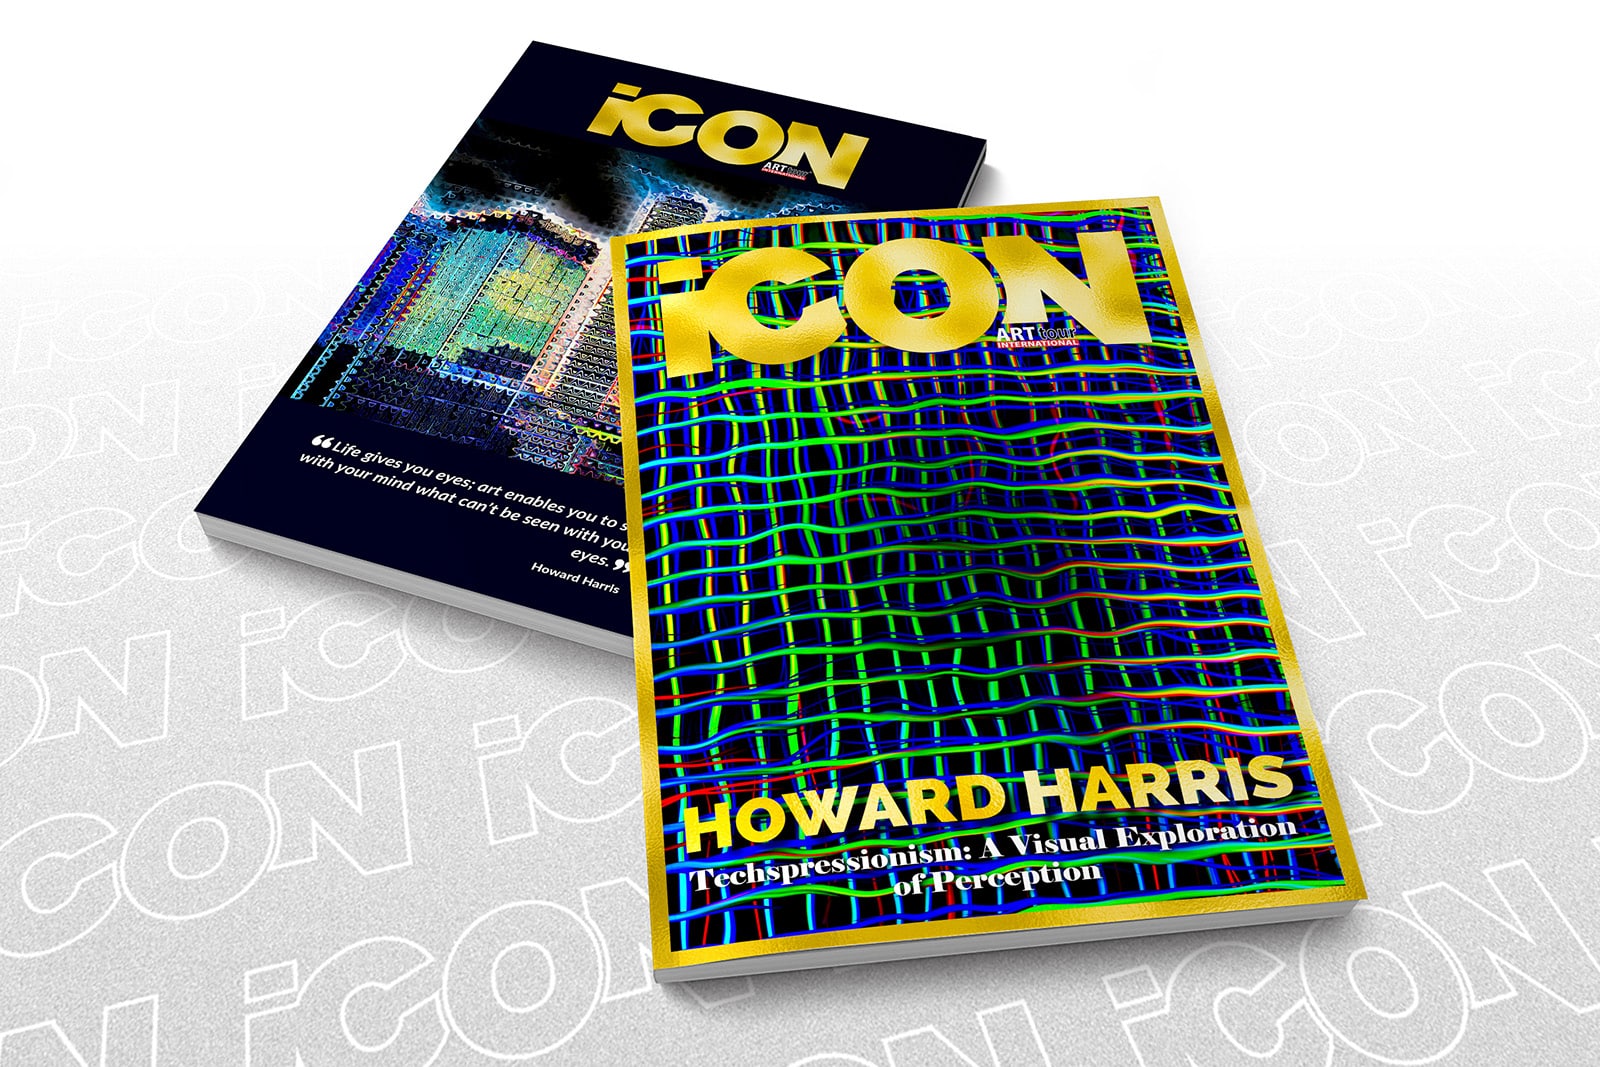 Howard Harris - ICON by ATIM